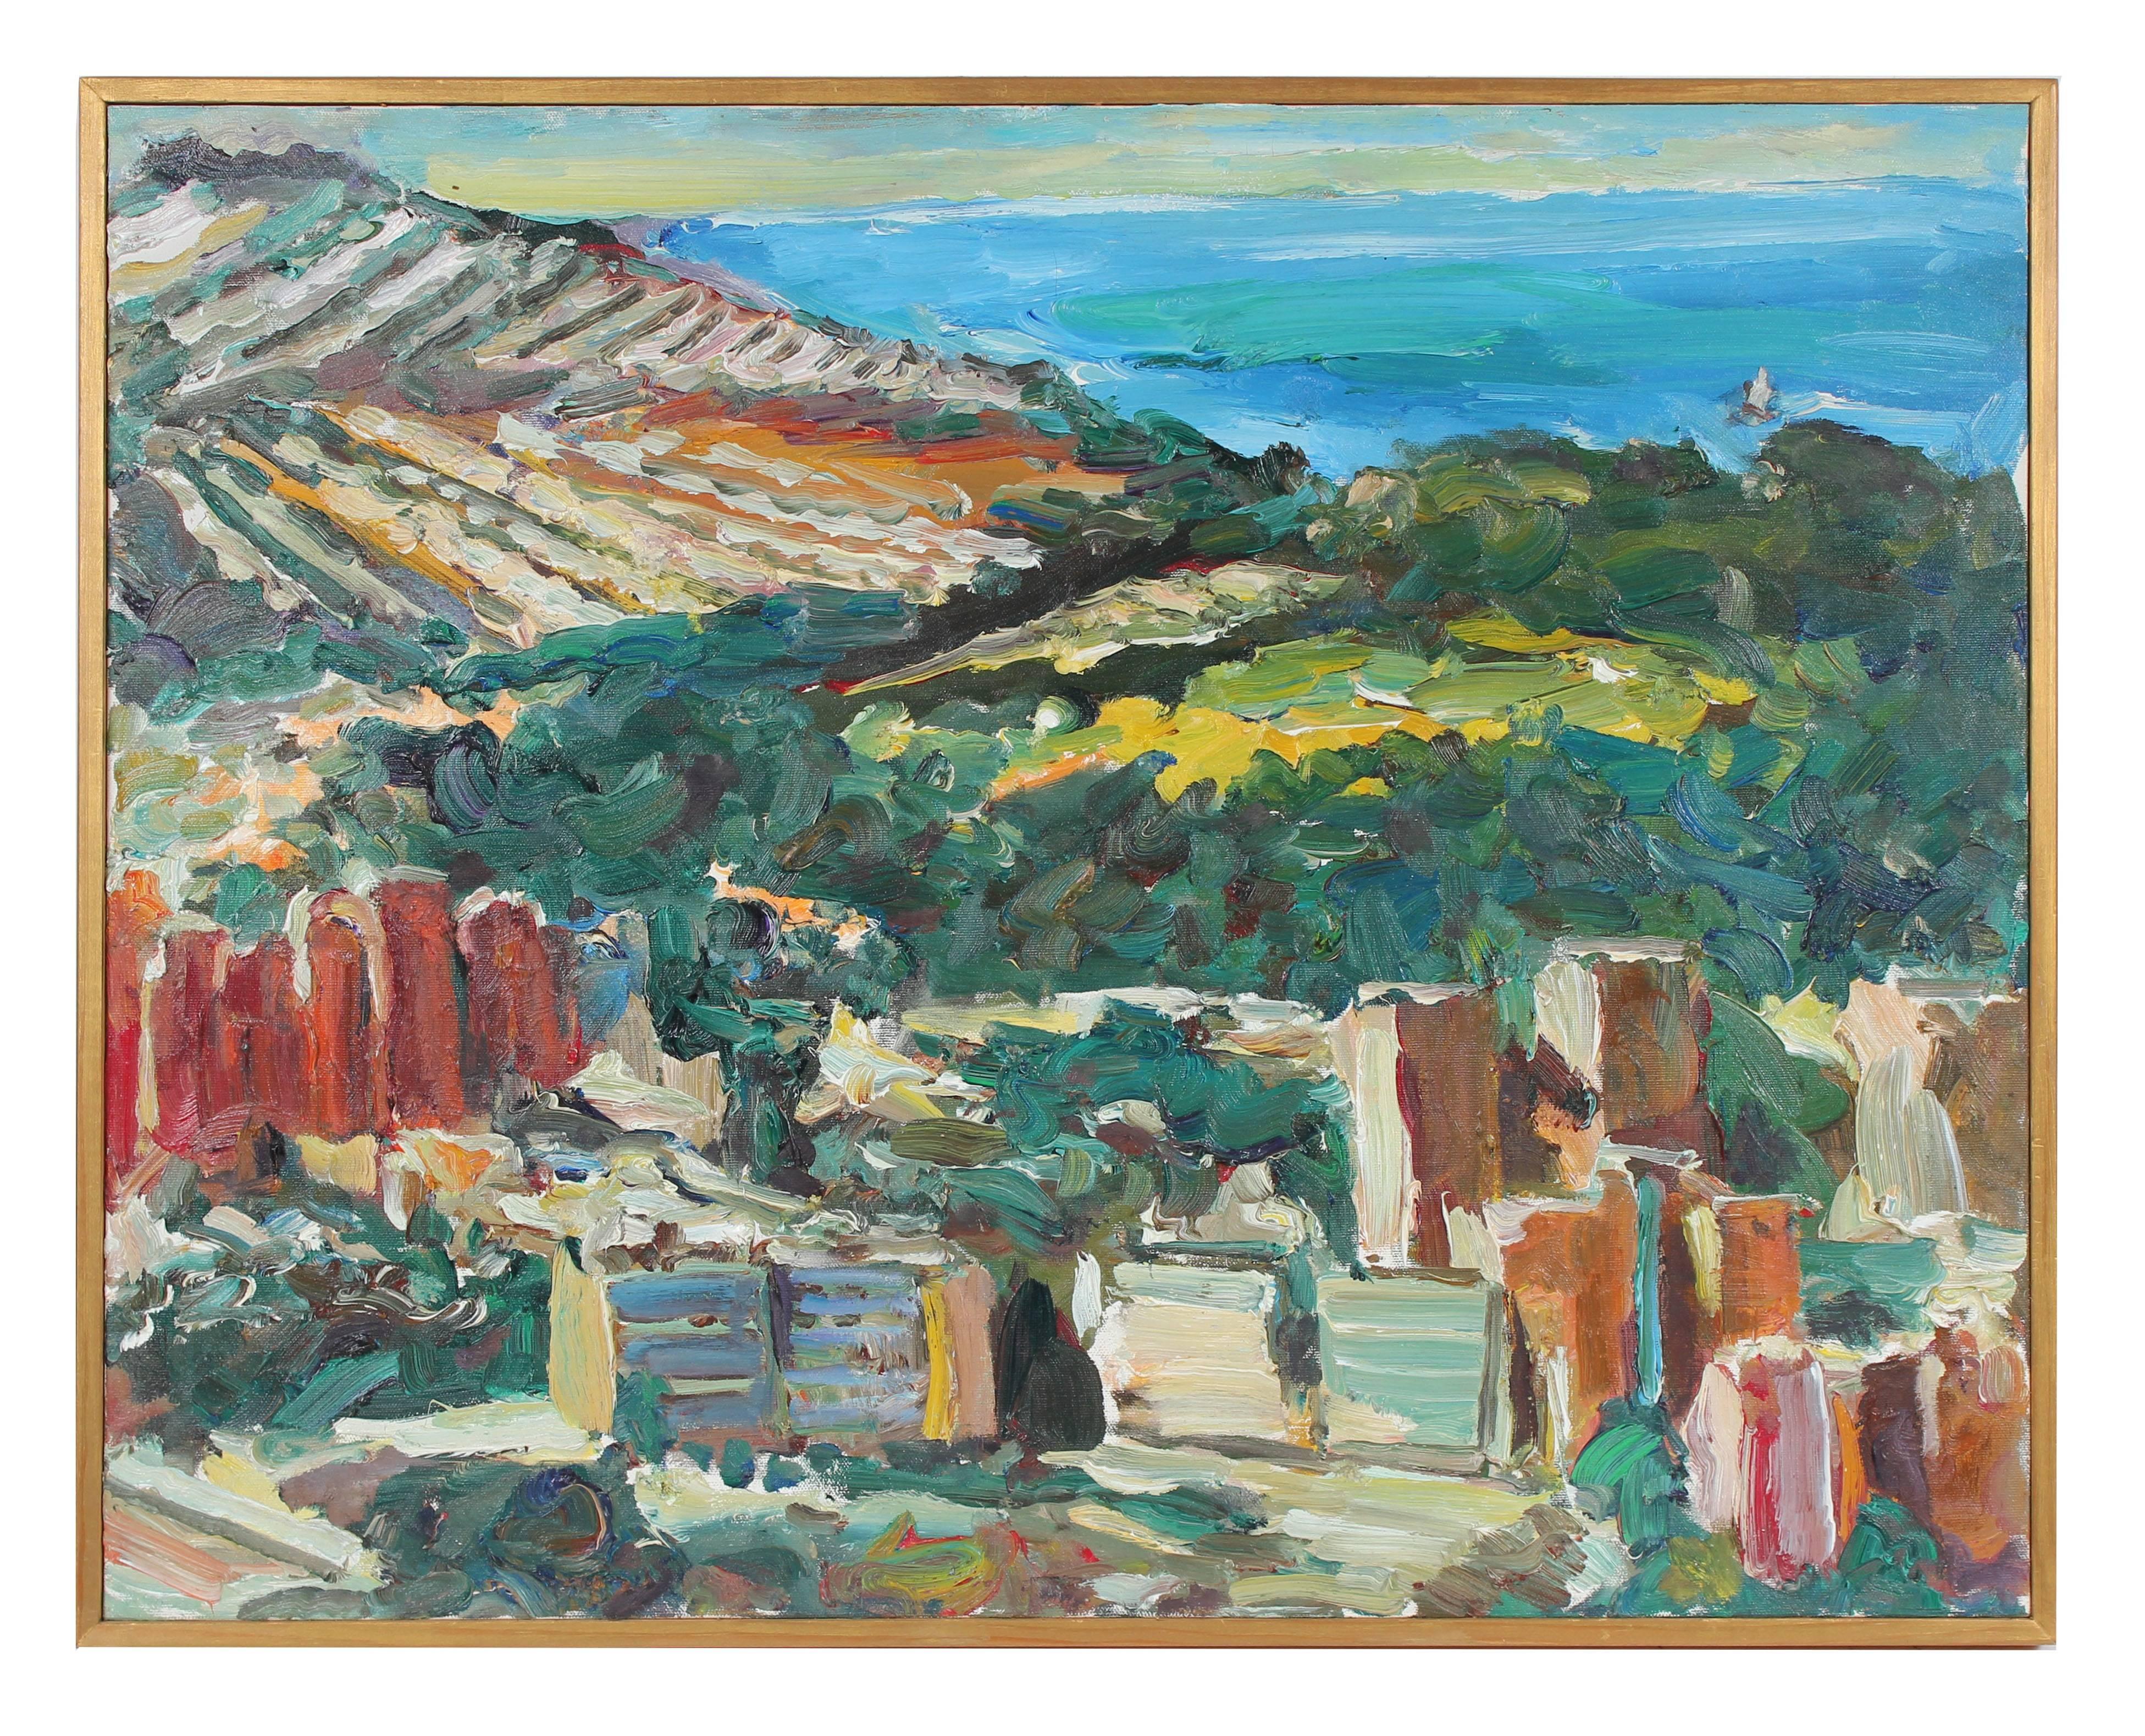 Jack Freeman Abstract Painting - "Les Petites Boites" San Francisco Landscape, Oil on Canvas, 2004